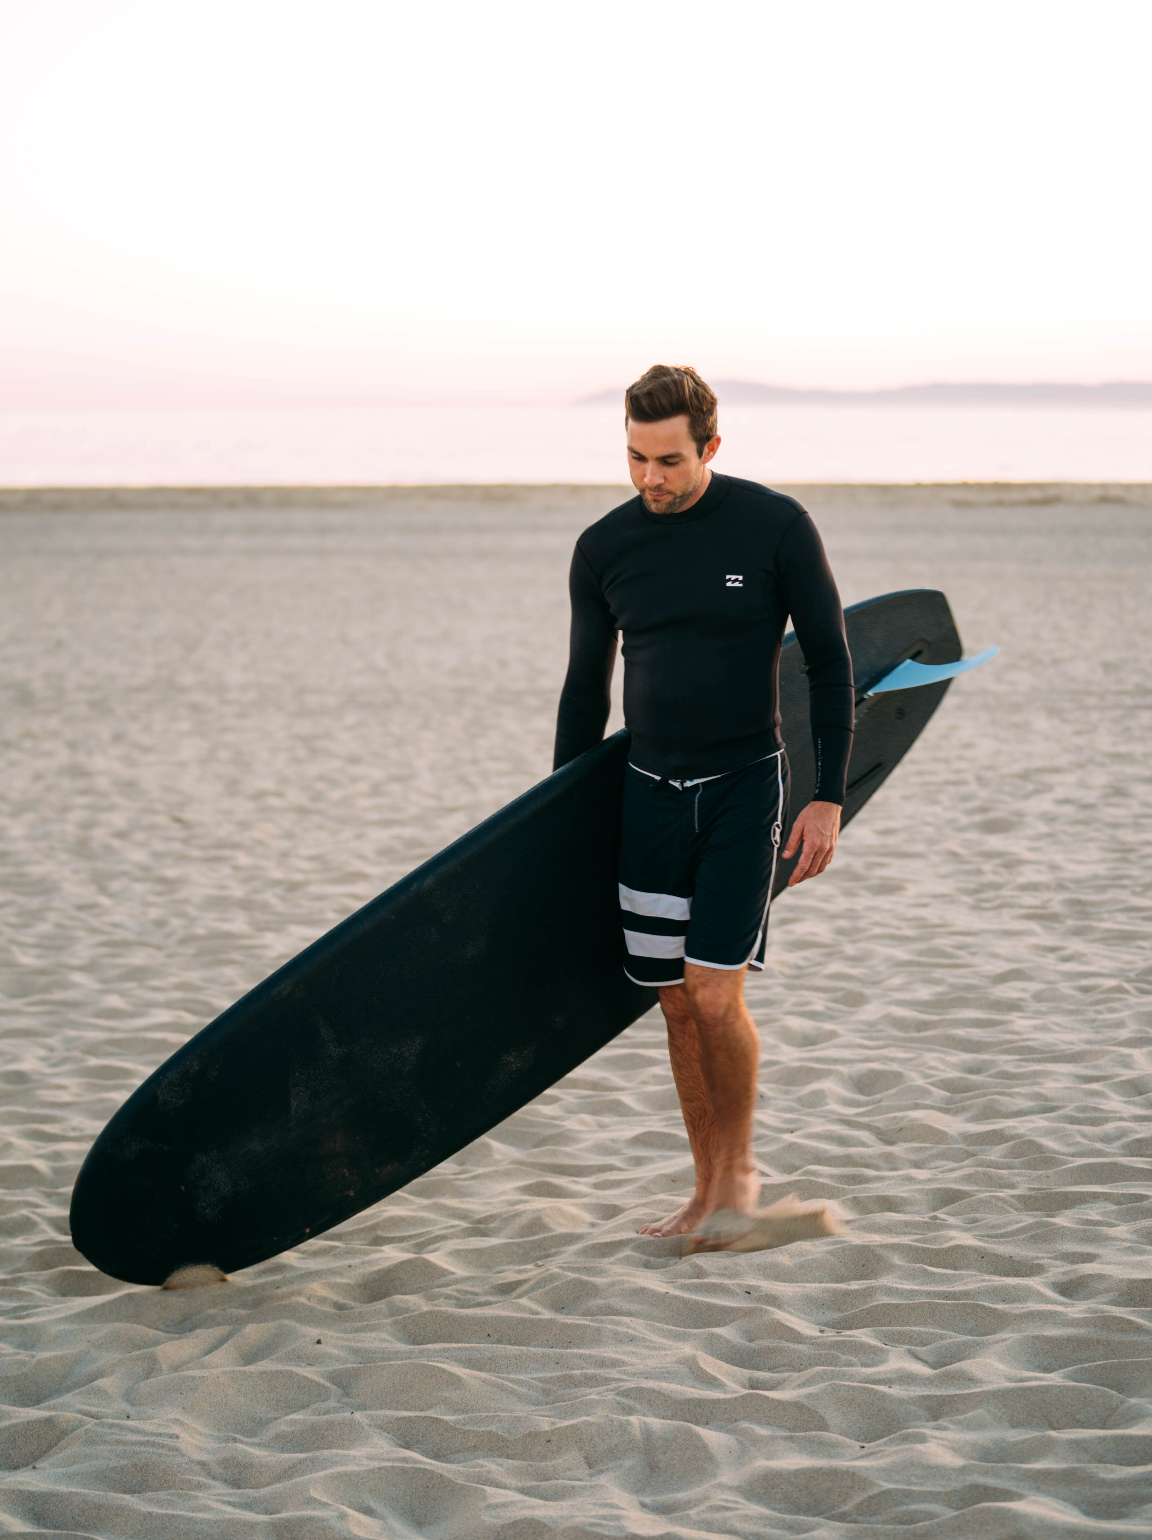 A man on a beach with a black 7 foot 10 inch Formula Fun Foamies DOHO surfboard